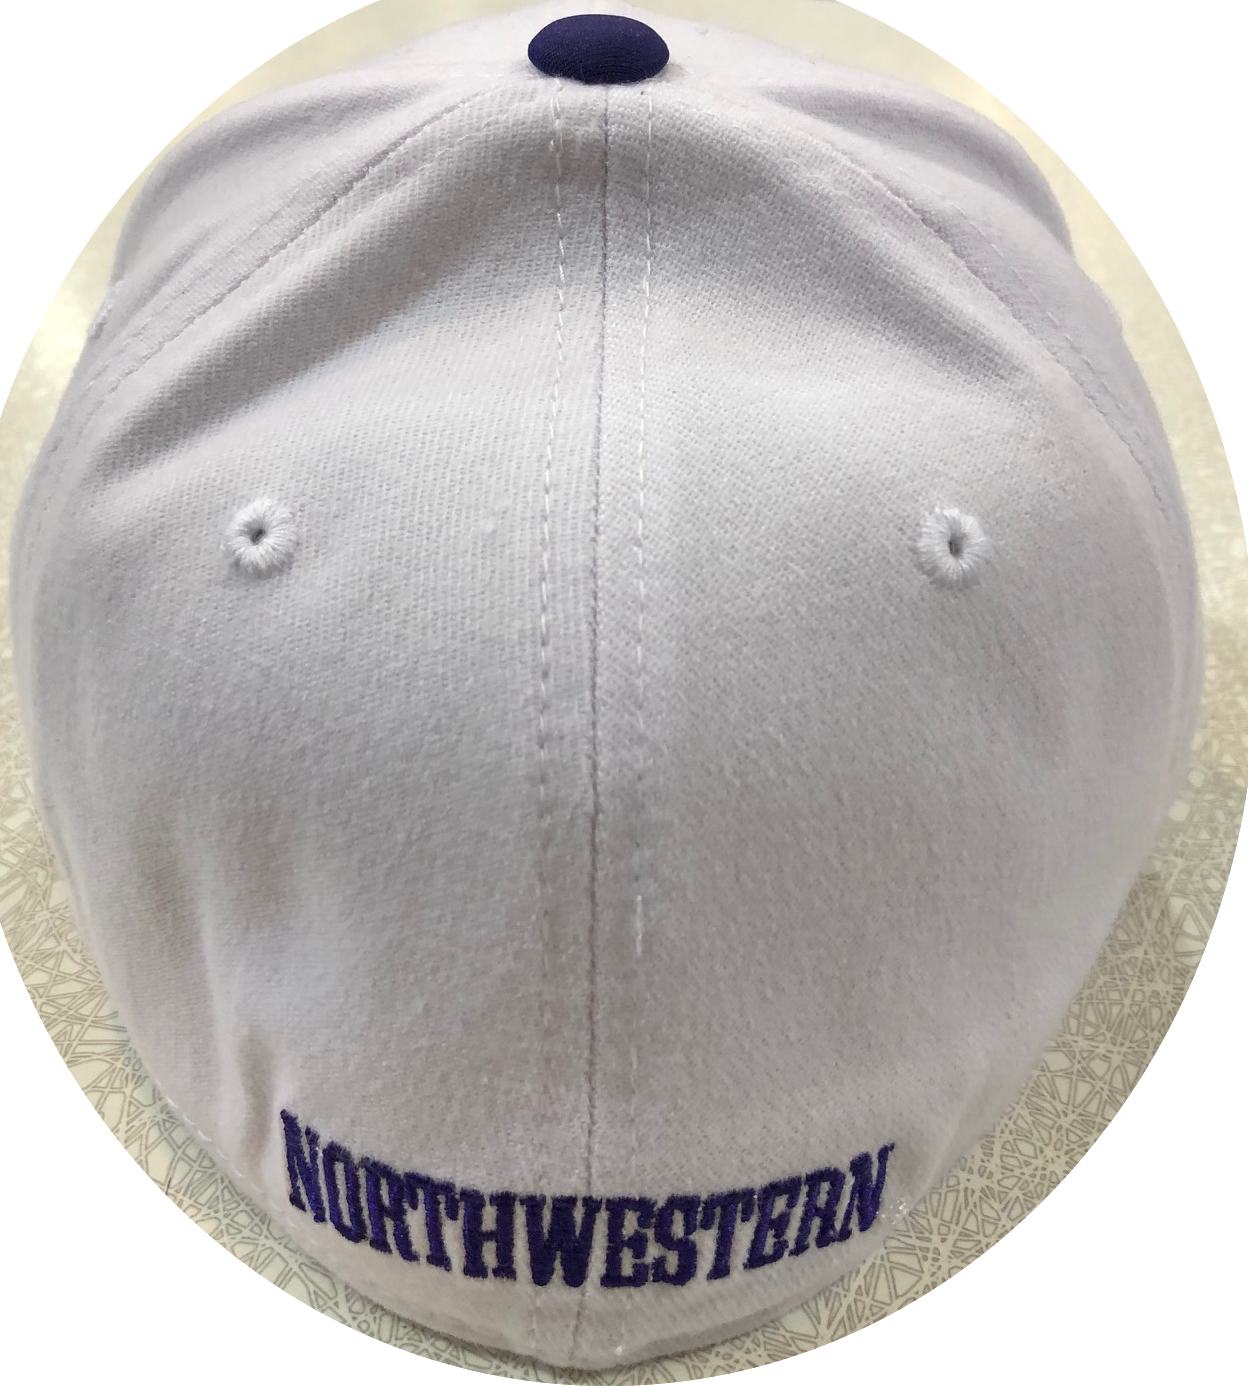 Northwestern Wildcats Top of the World Infield One Fit Flex Hat - White/Purple